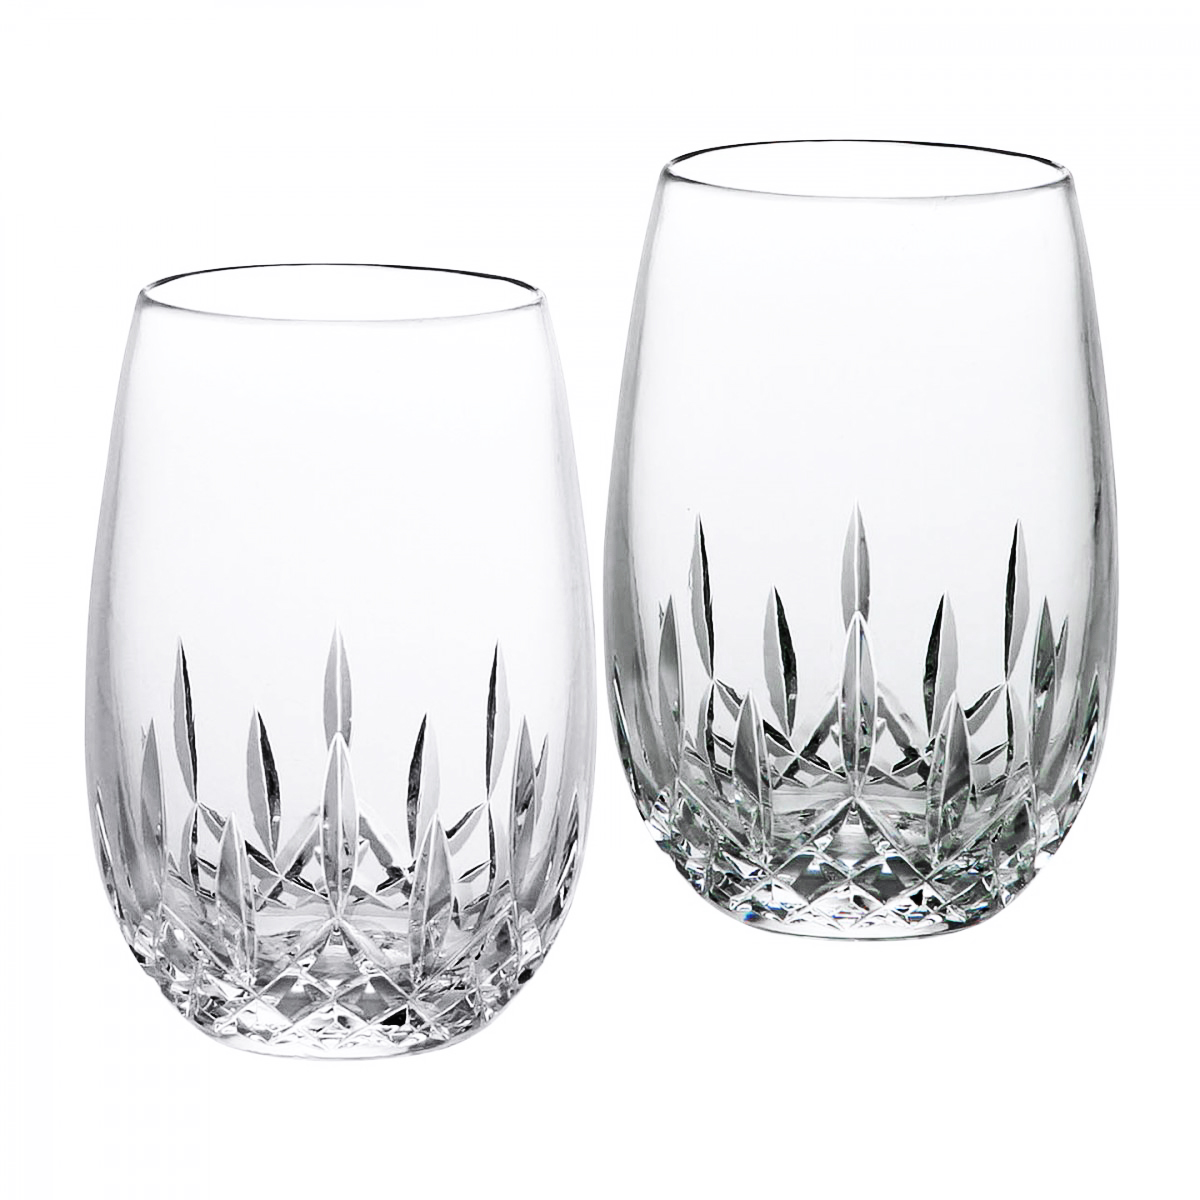 Waterford Crystal Stemless Wine Glasses, PAIR